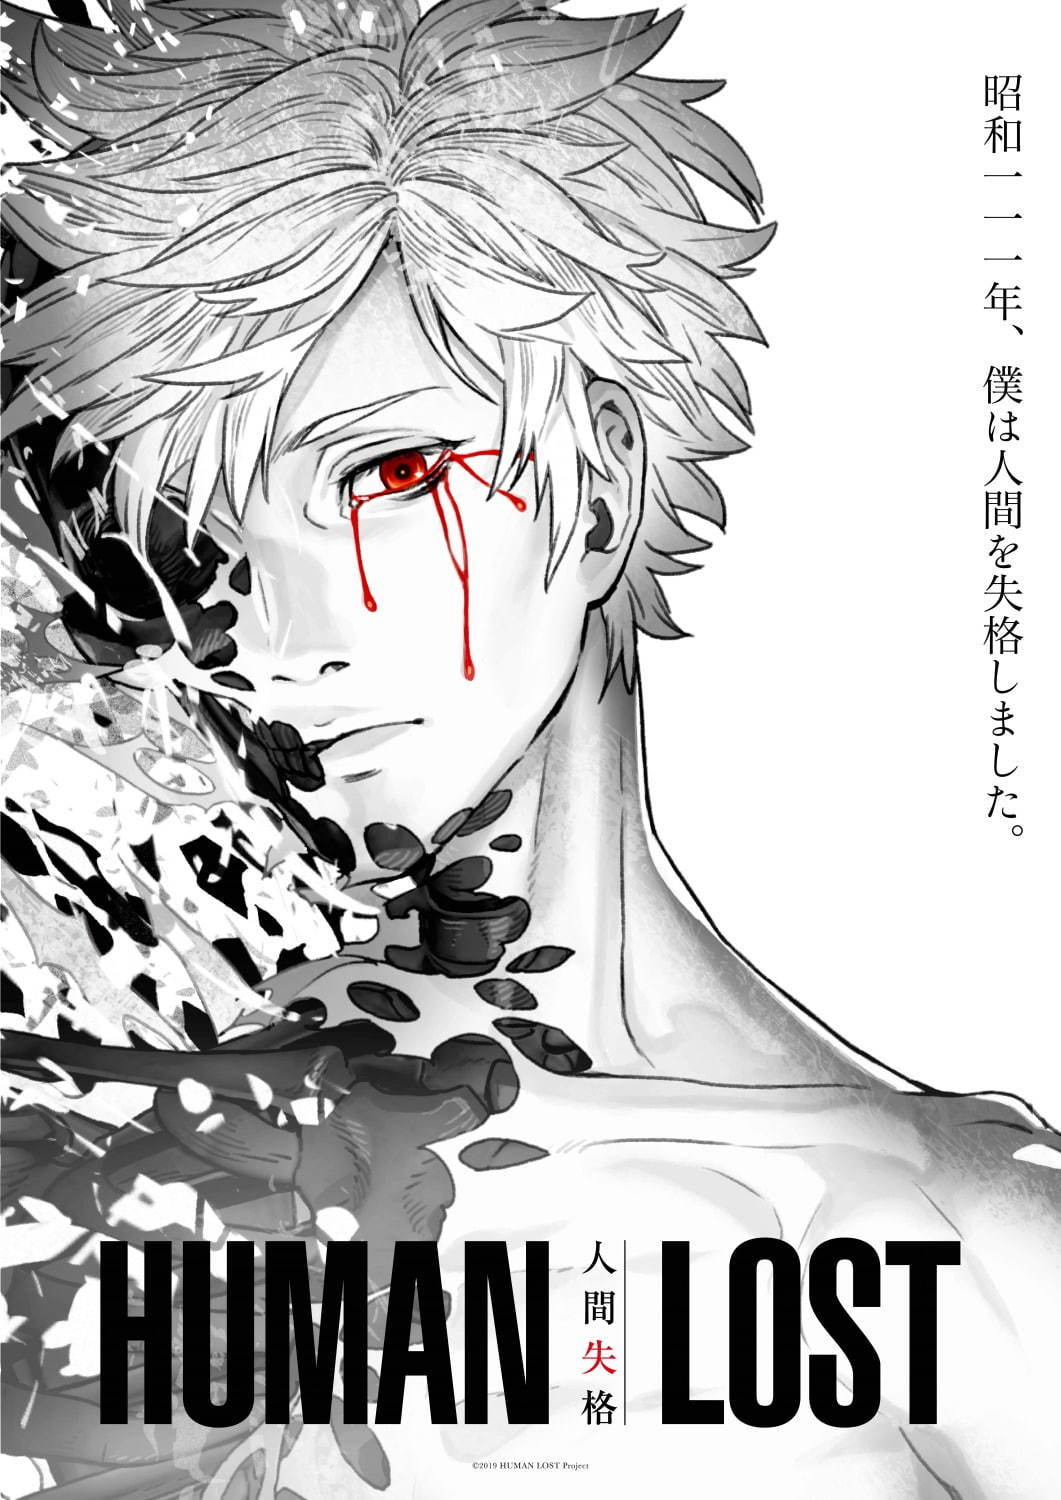 Human lost anime